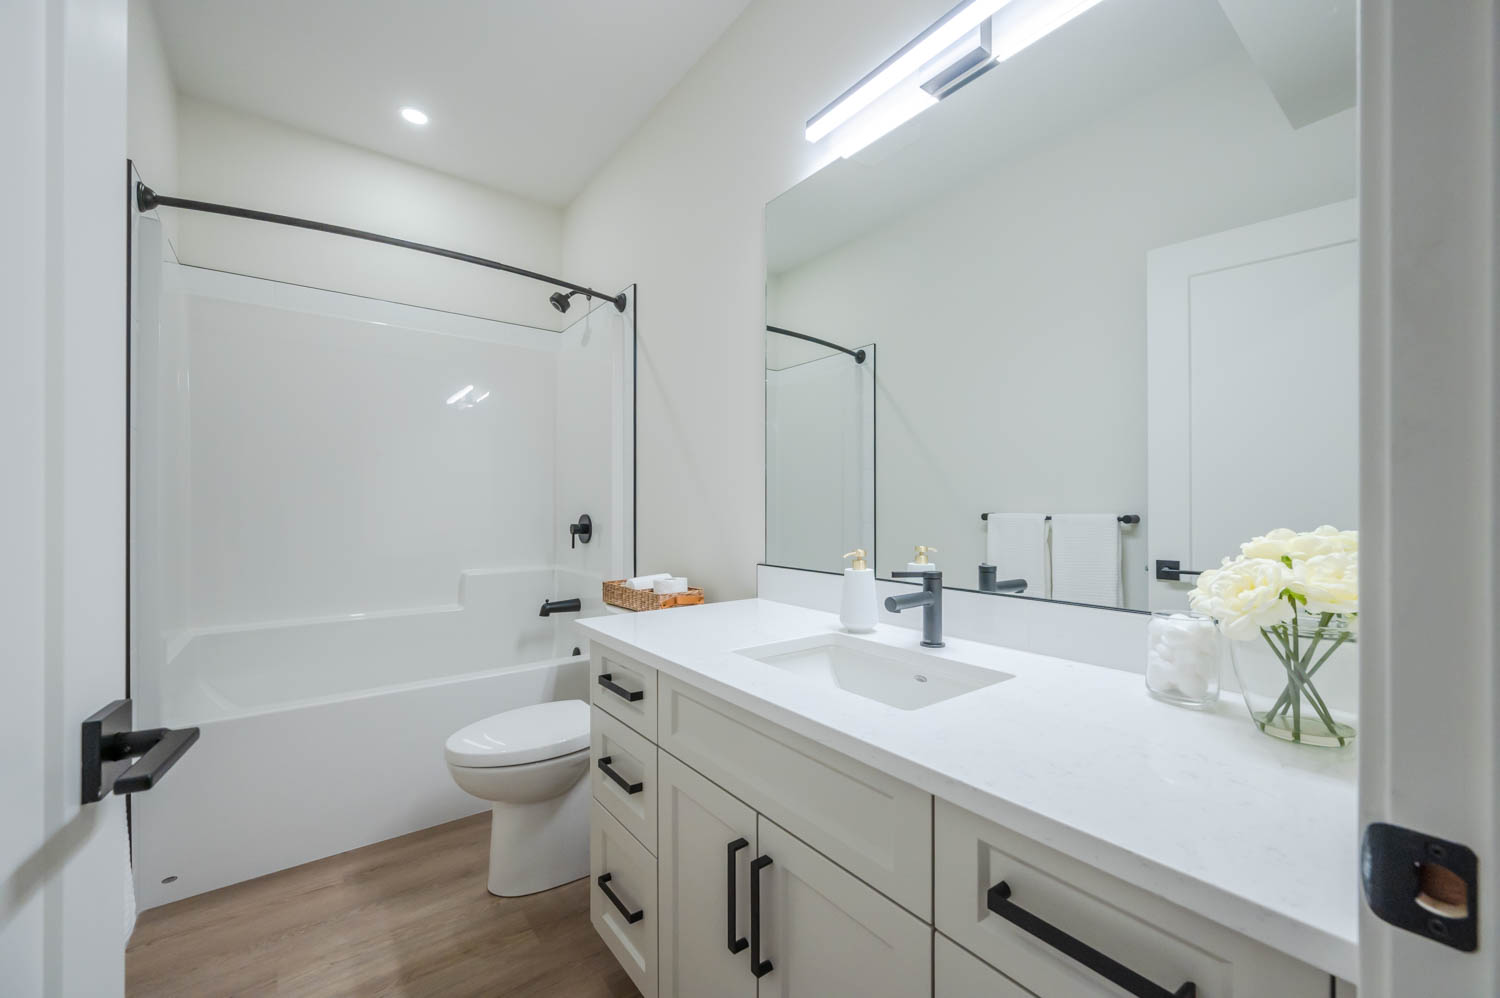 Bathroom interior with sink, toilet, and bathtub